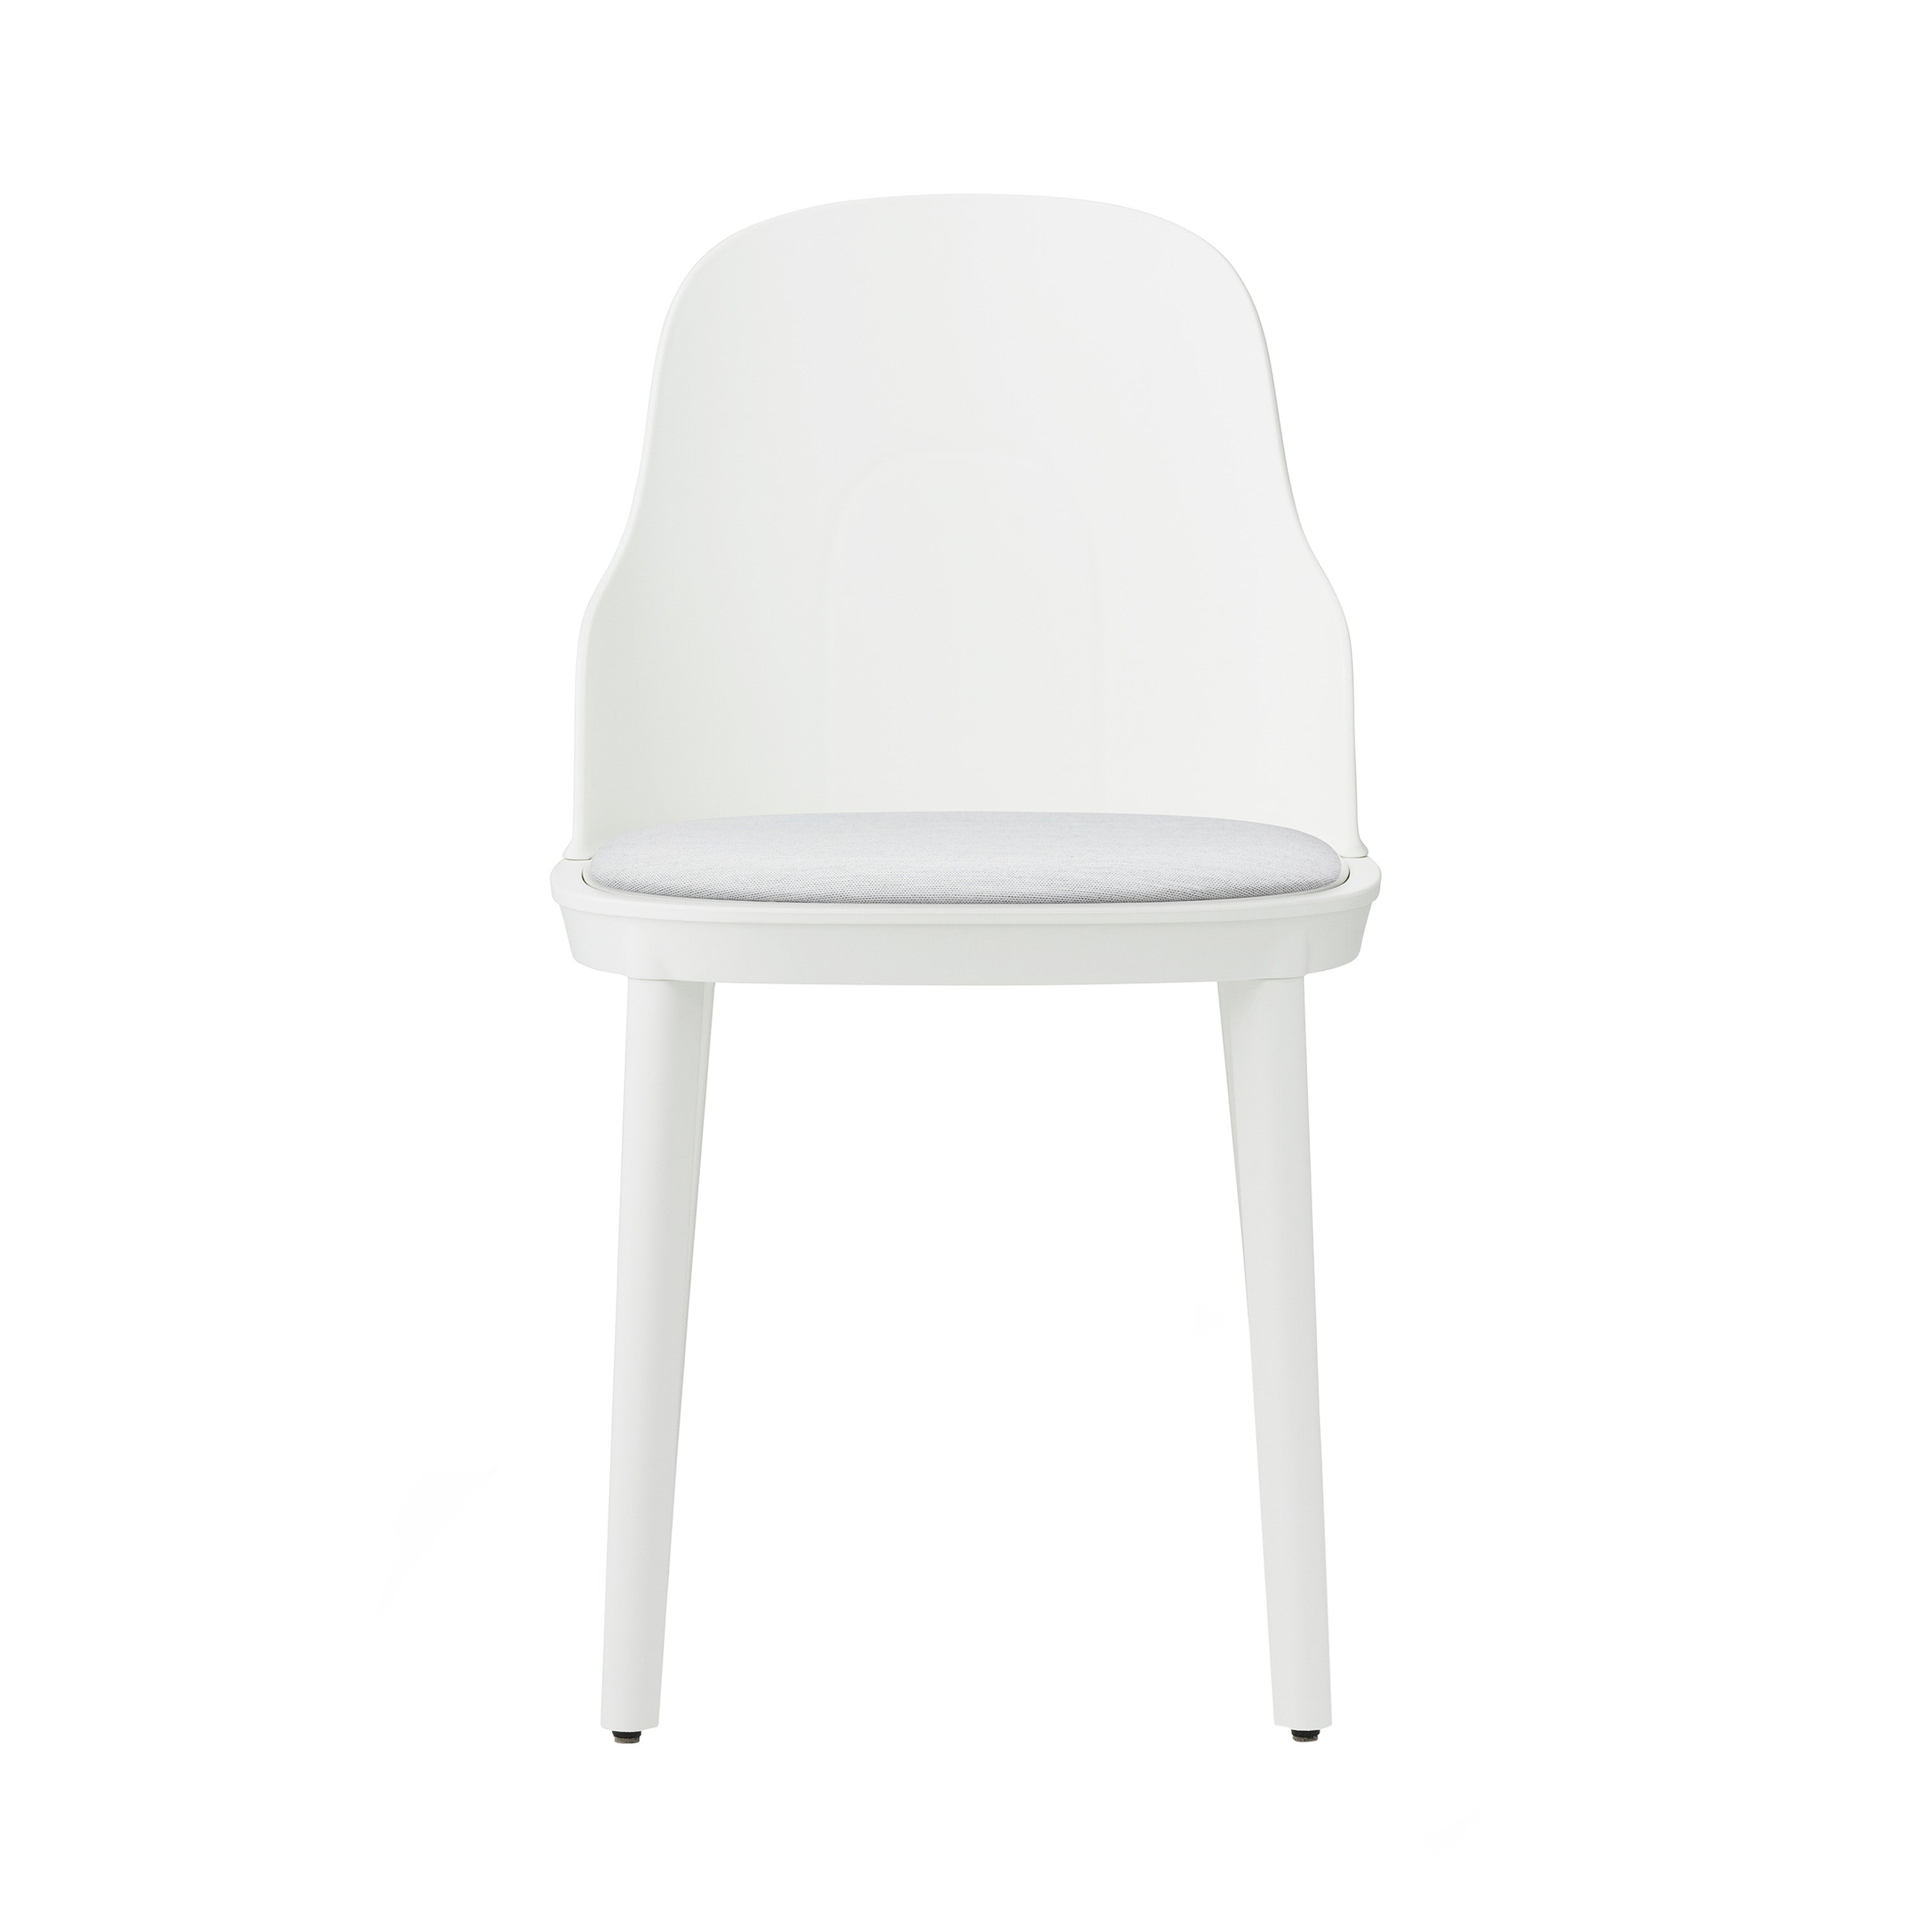 Allez Chair: Upholstered + White + Polypropylene